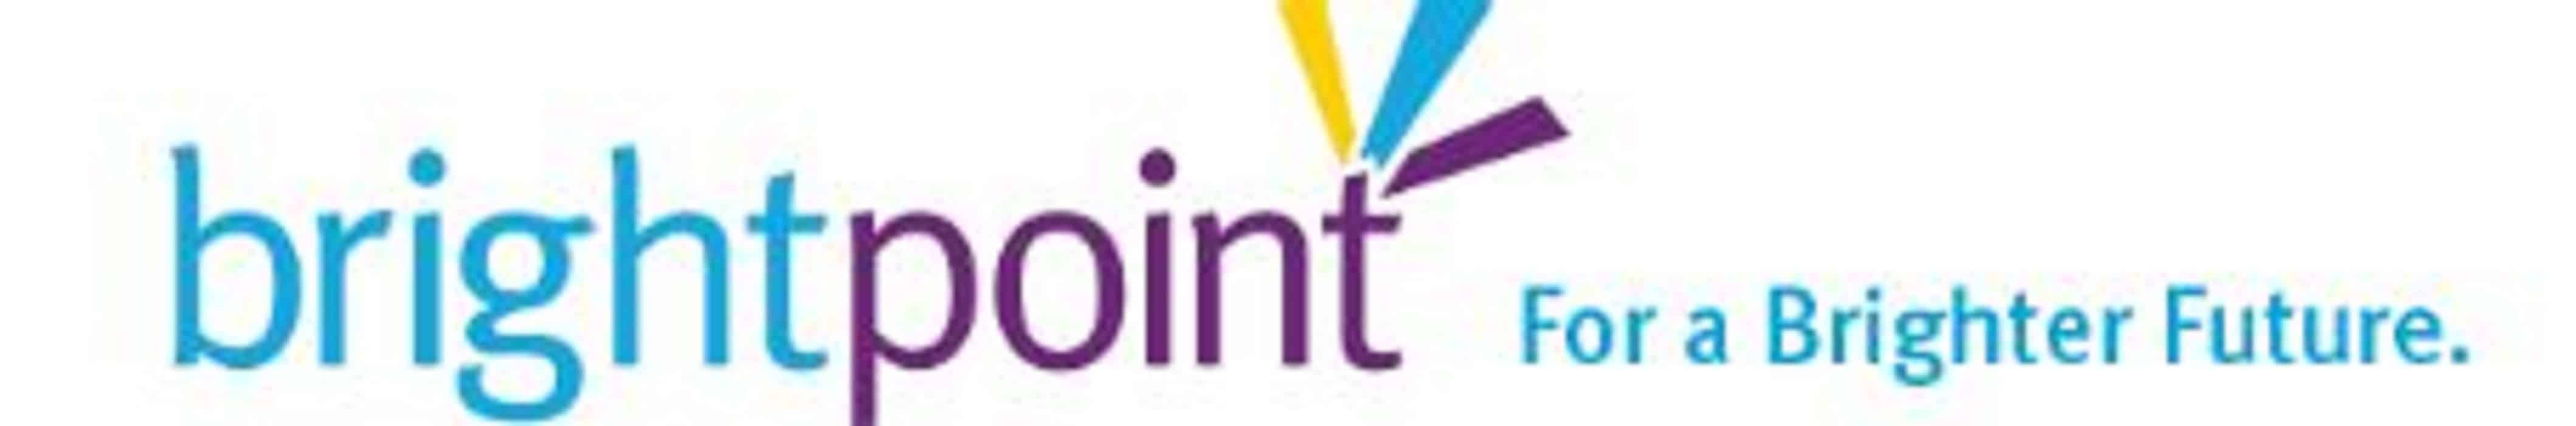 Brightpoint Logo - Brightpoint Summer Cooling Program accepting applications through ...